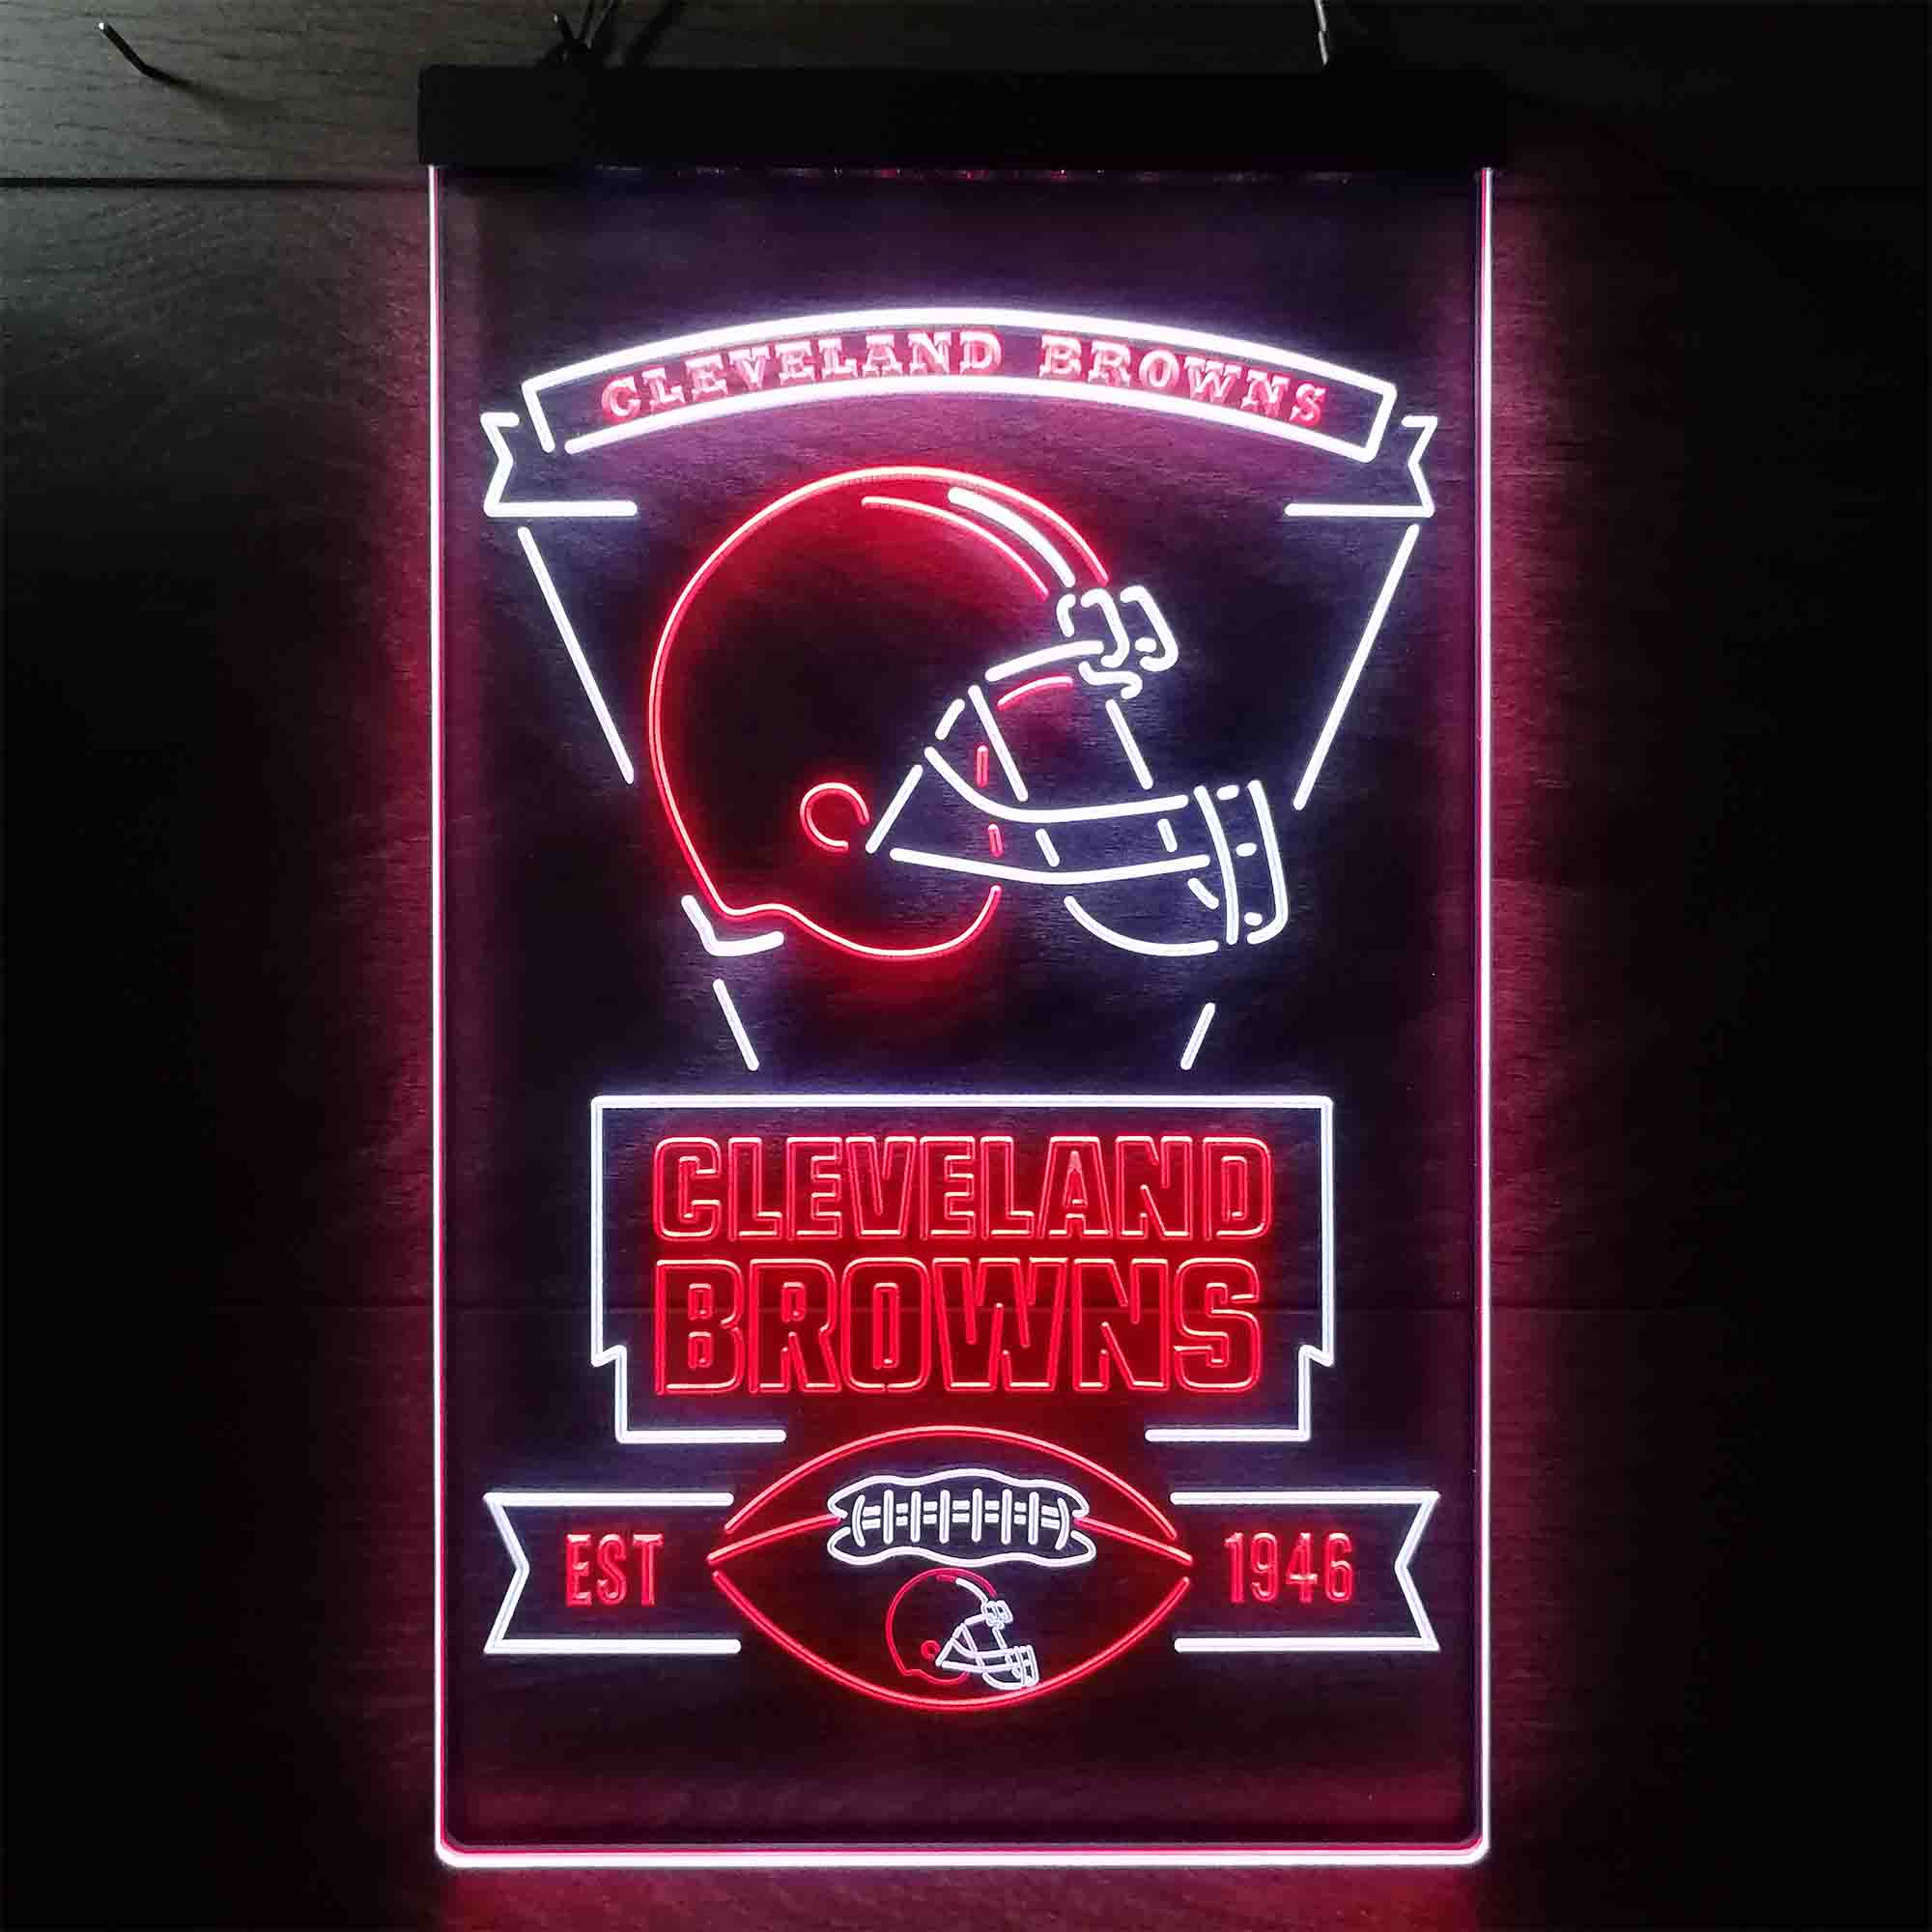 Cleveland Browns Est. 1946 LED Neon Sign